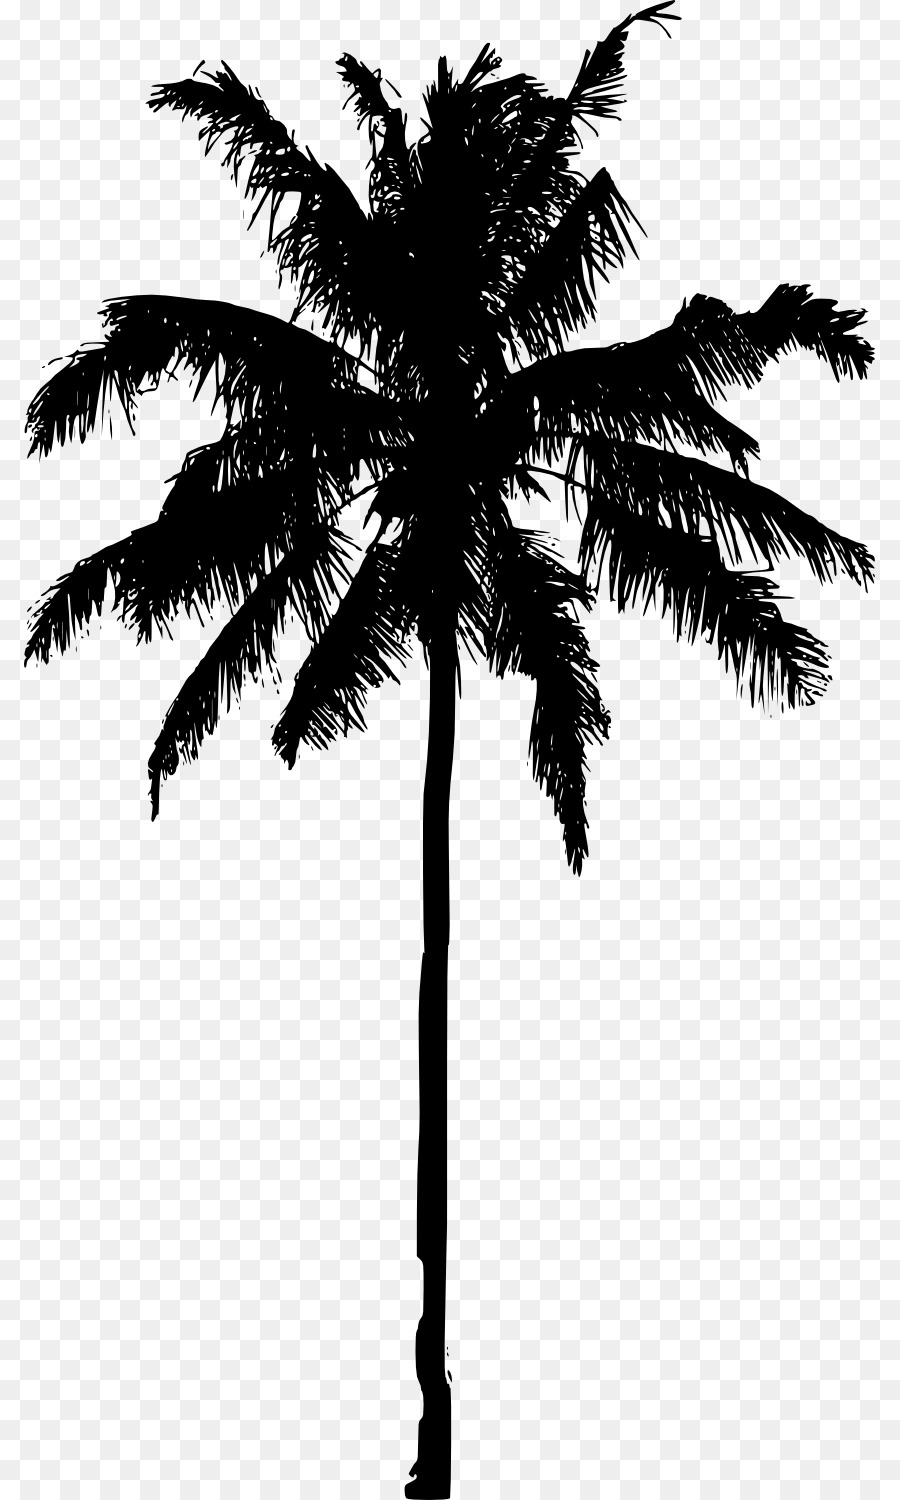 Free Palm Tree Silhouette Transparent, Download Free Palm Tree ...